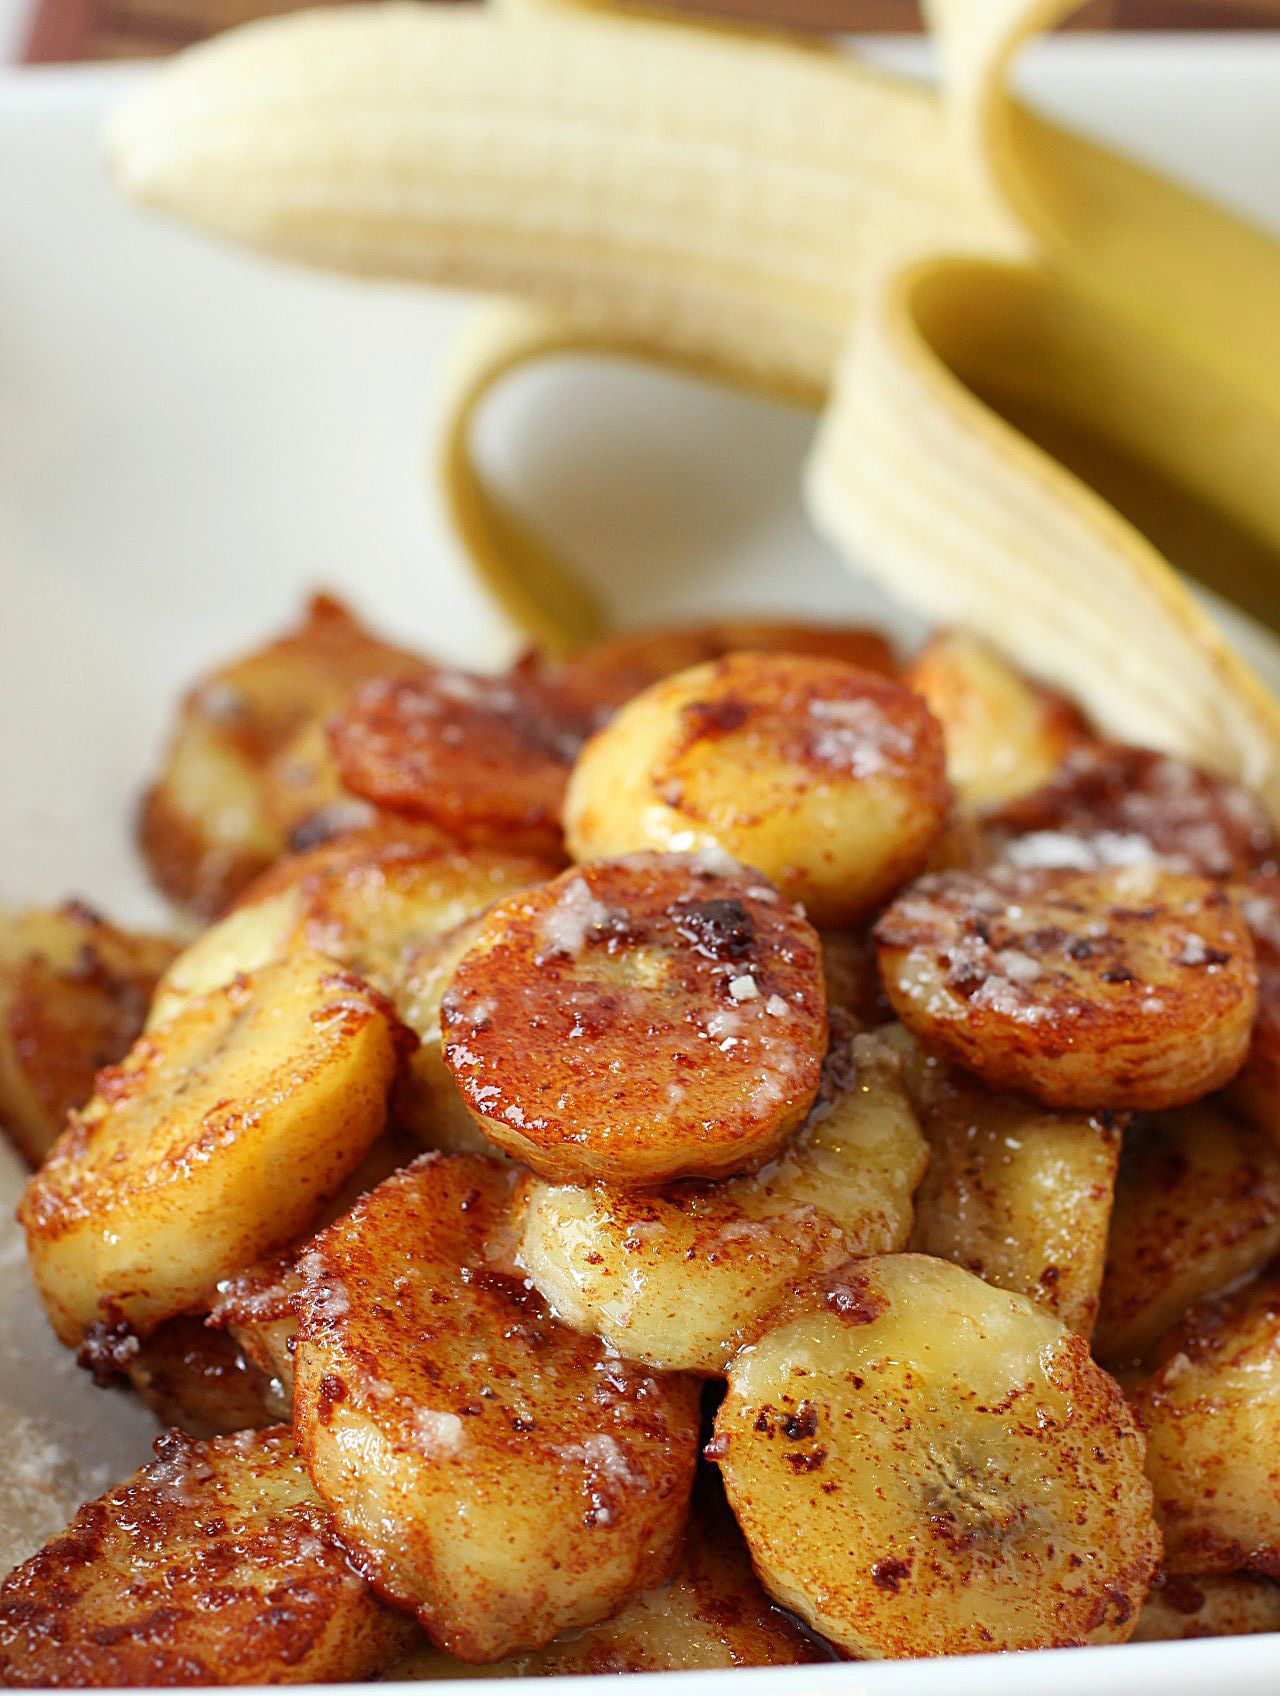 Pan Fried Cinnamon Bananas. The Healthy Alternative Snack